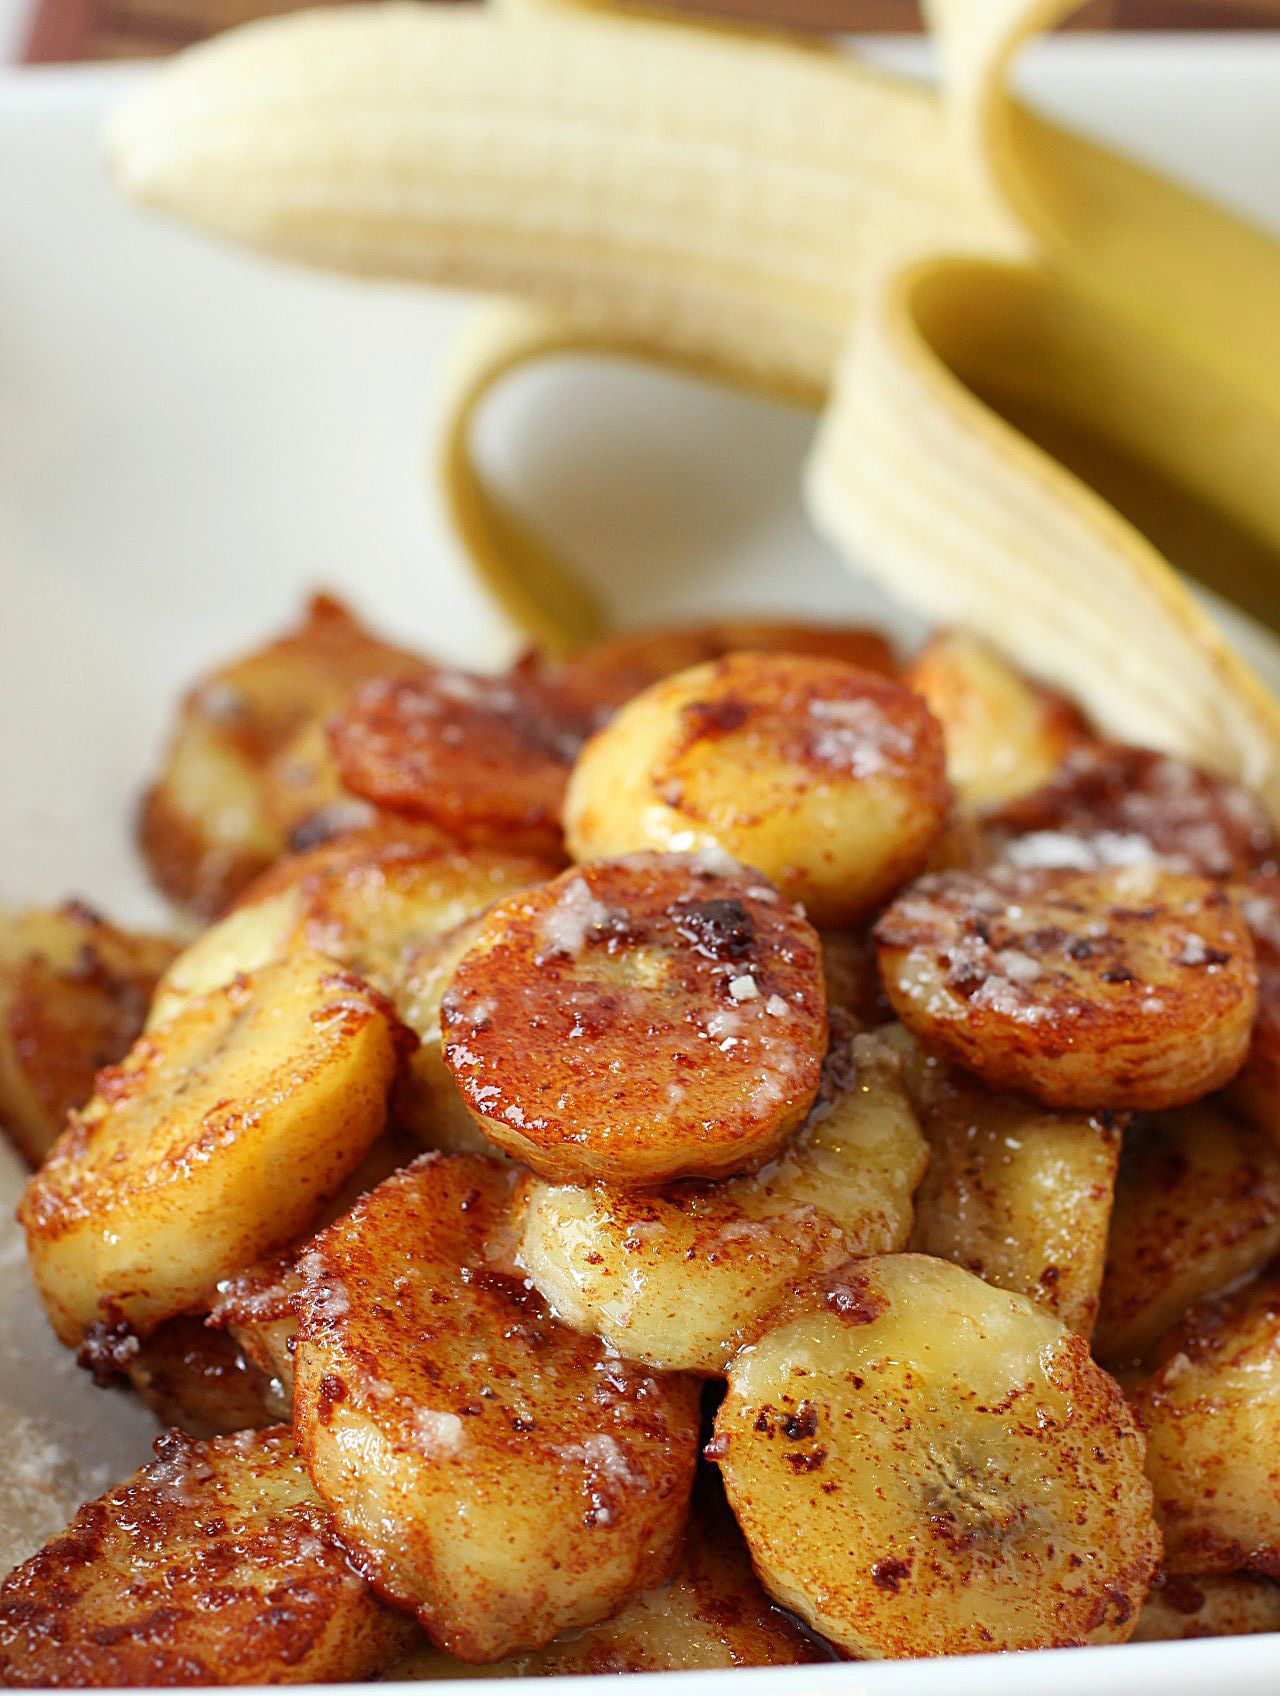 Pan Fried Cinnamon Bananas. The Healthy Alternative Snack